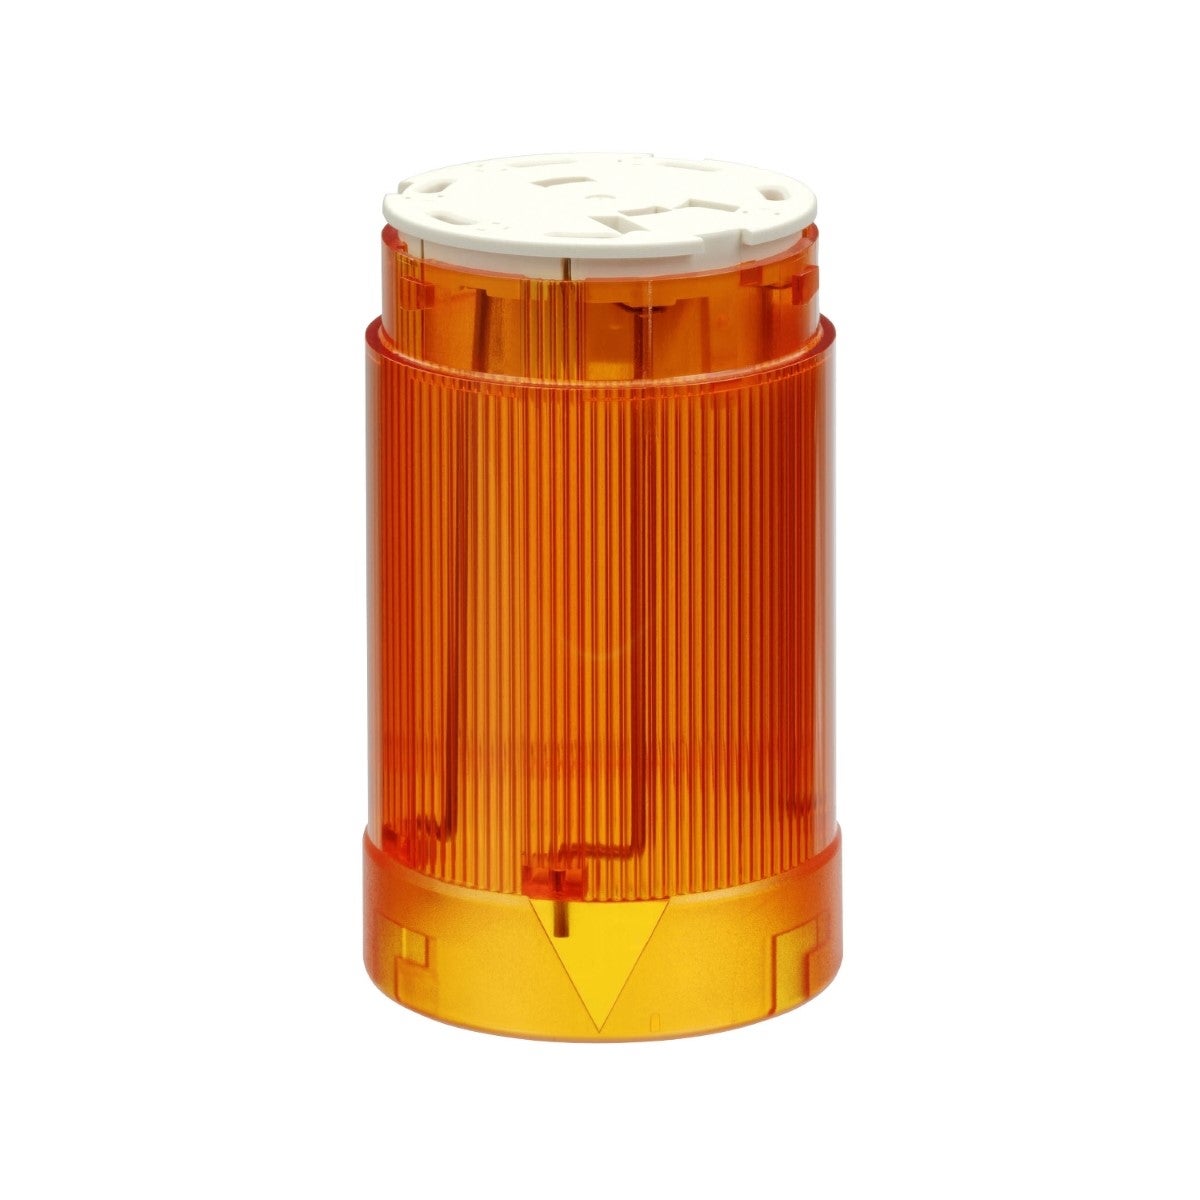 Harmony XVM, Illuminated unit for modular tower lights, plastic, orange, Ø45, for bulb BA 15d, <= 230 V AC/DC